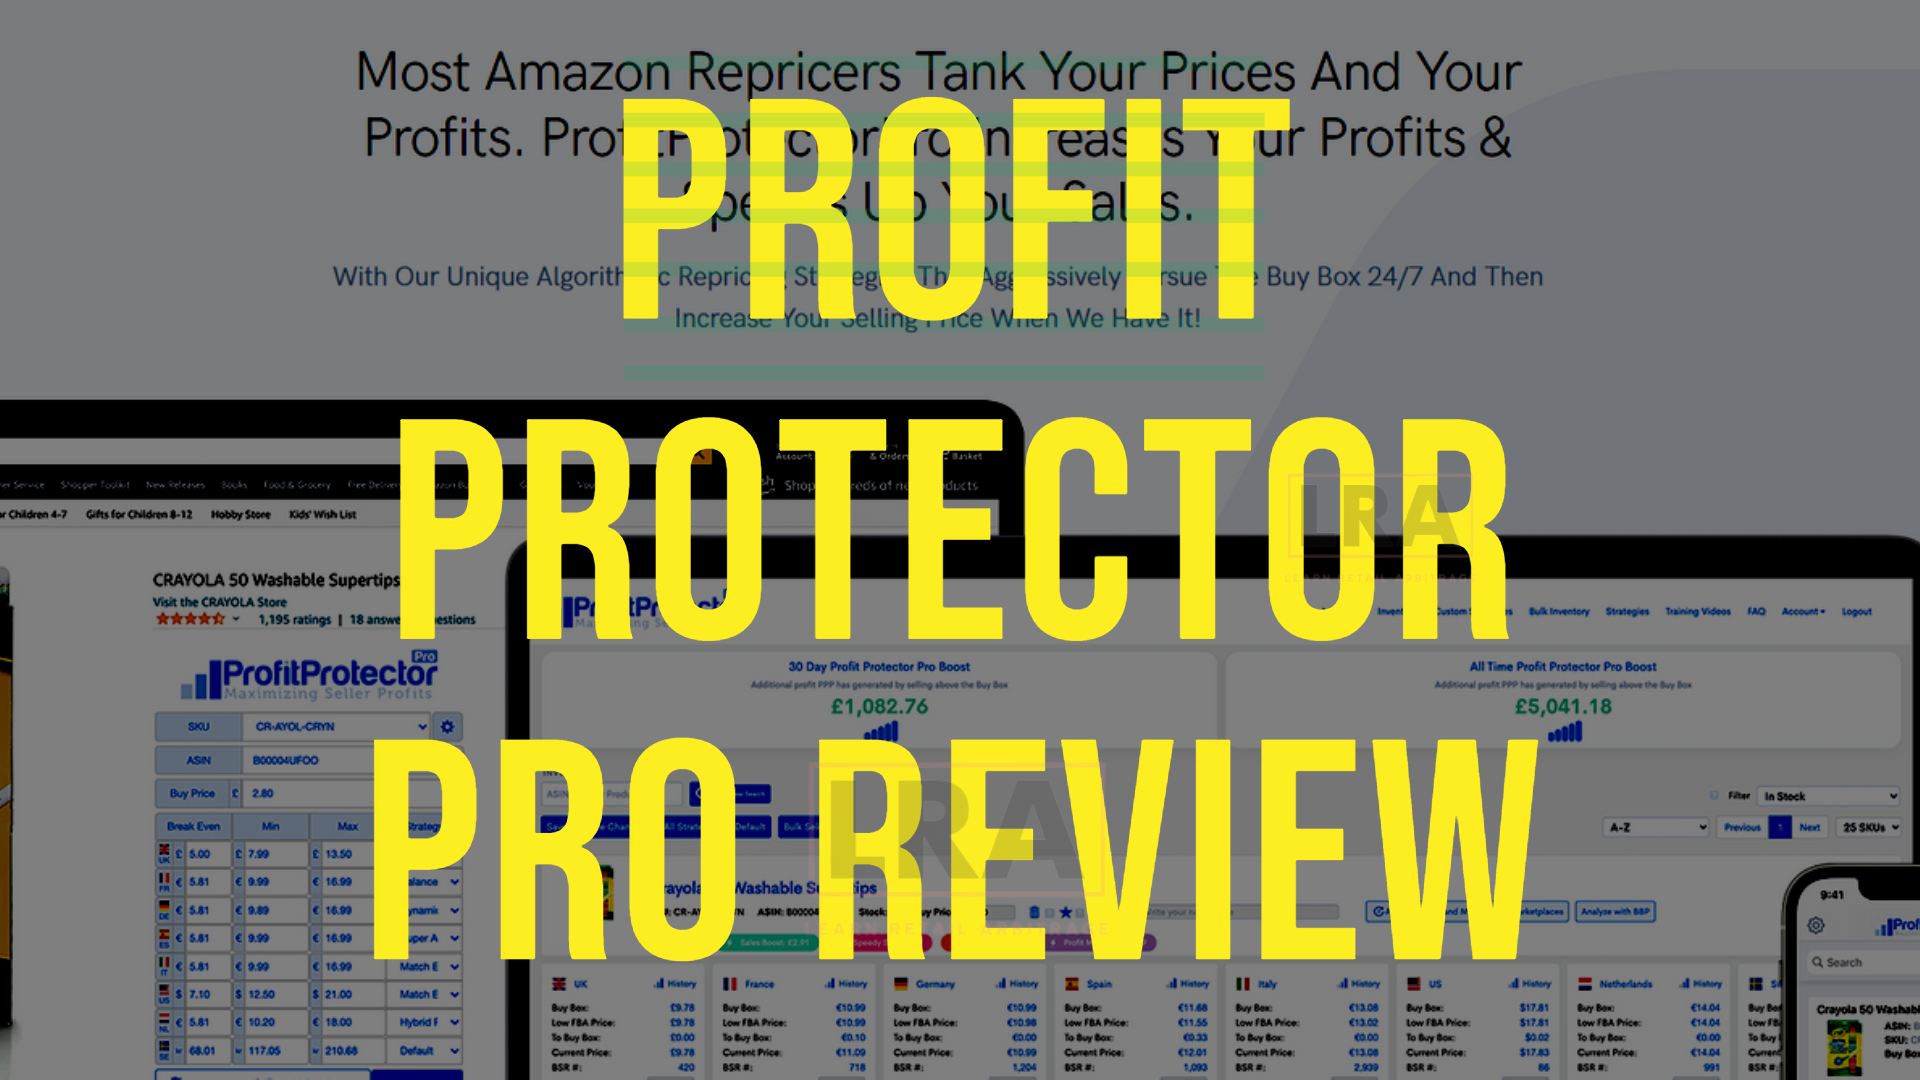 Profit Protector Pro Review